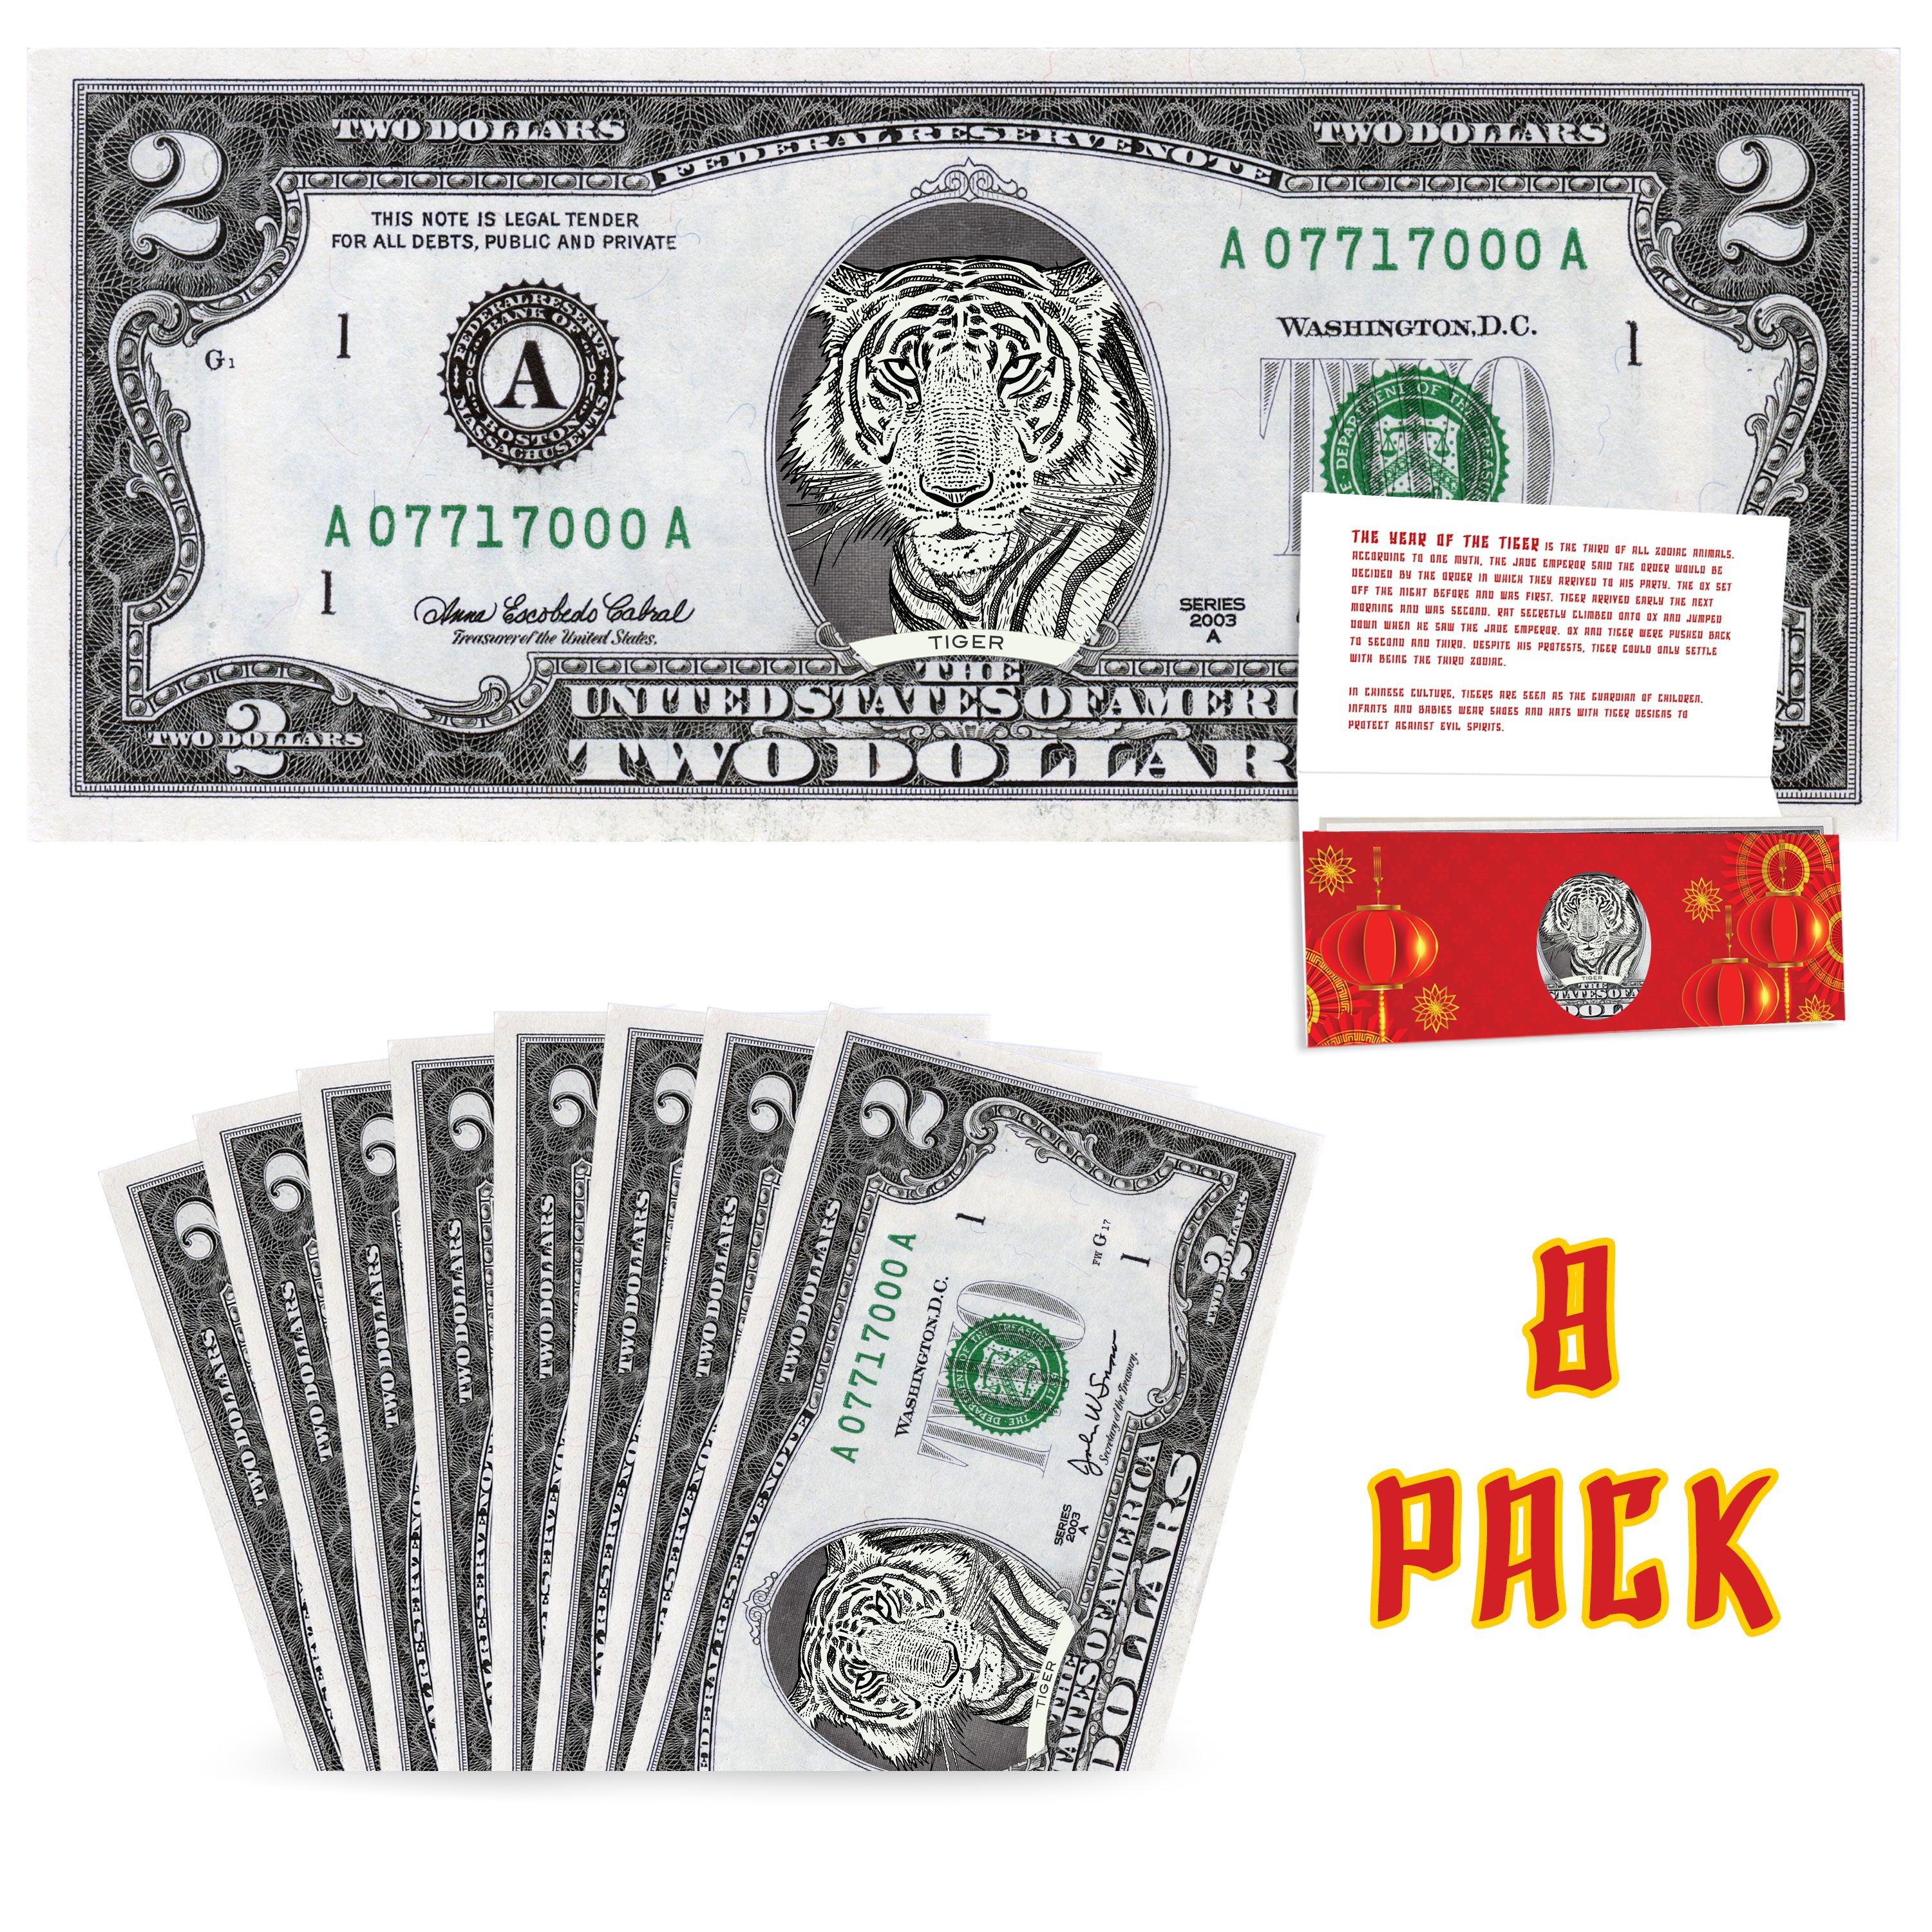 Red Envelope / Lucky Money Envelope Packing